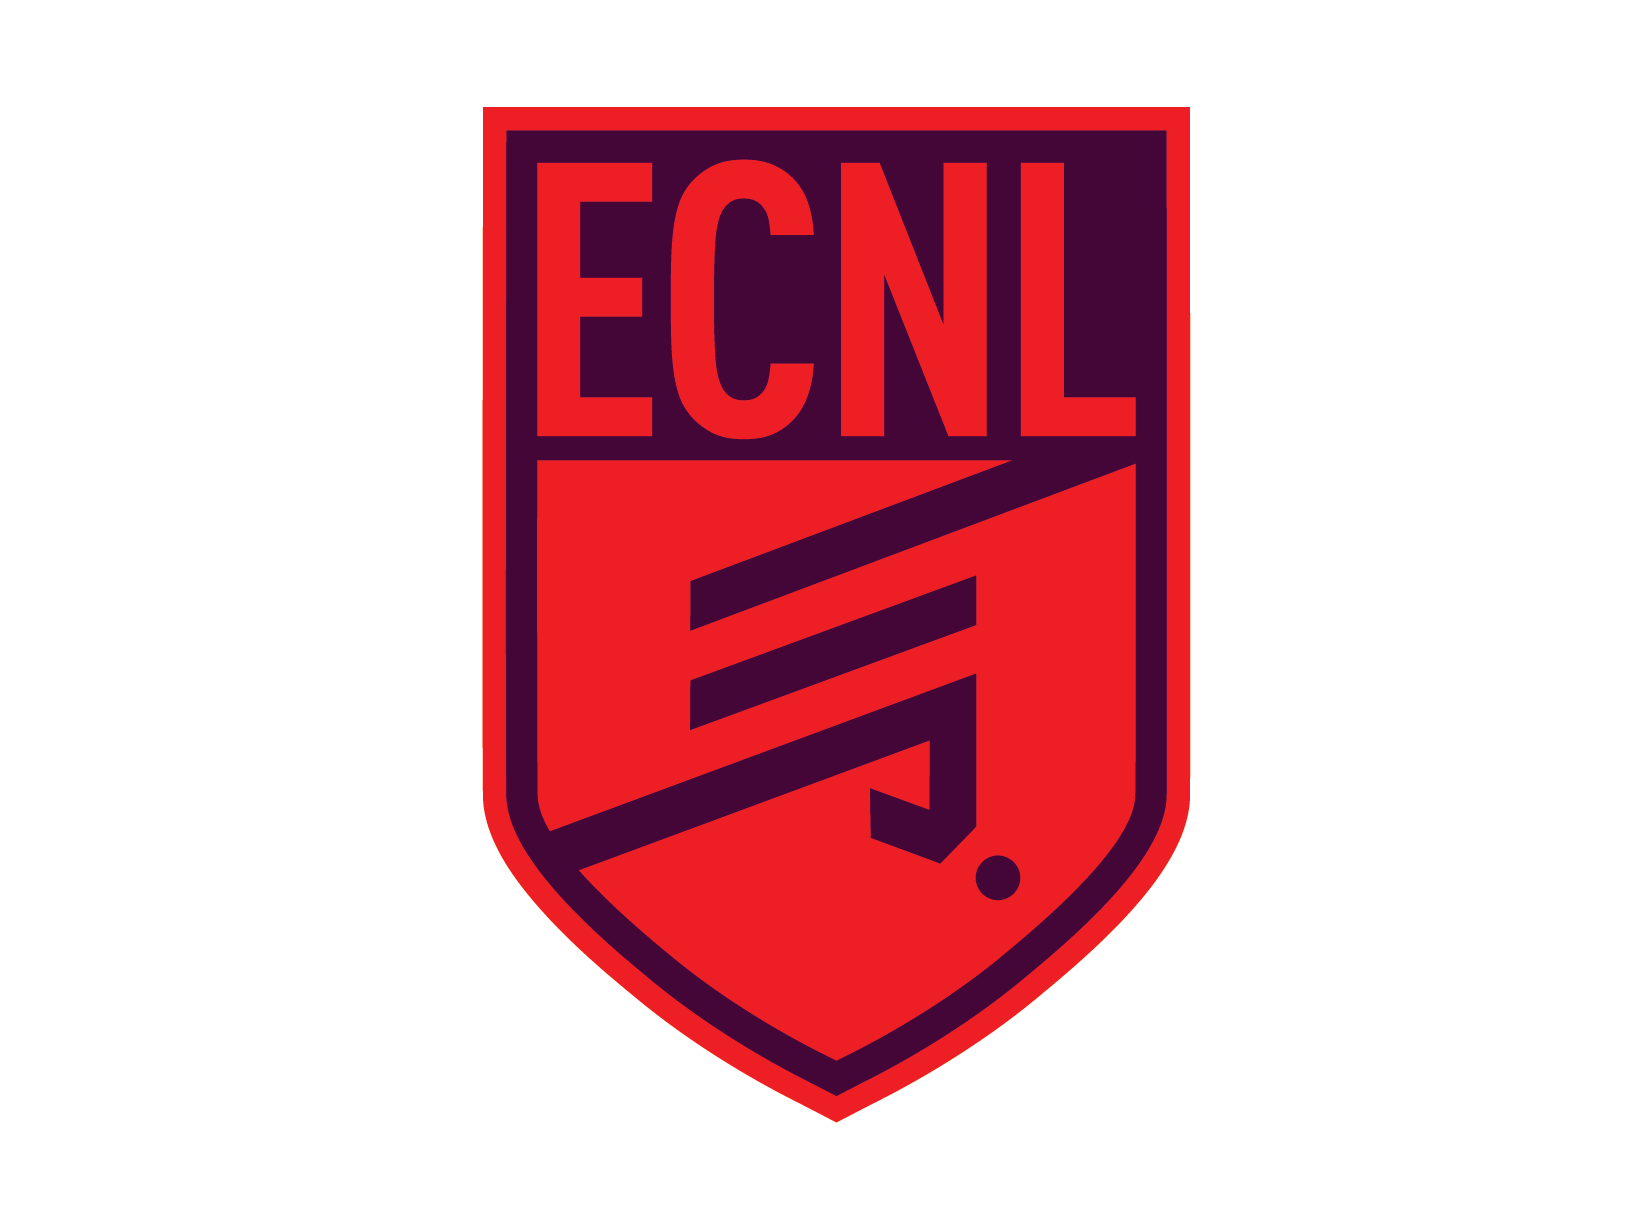 Elite Clubs National League | Organizational Profile, Work & Jobs